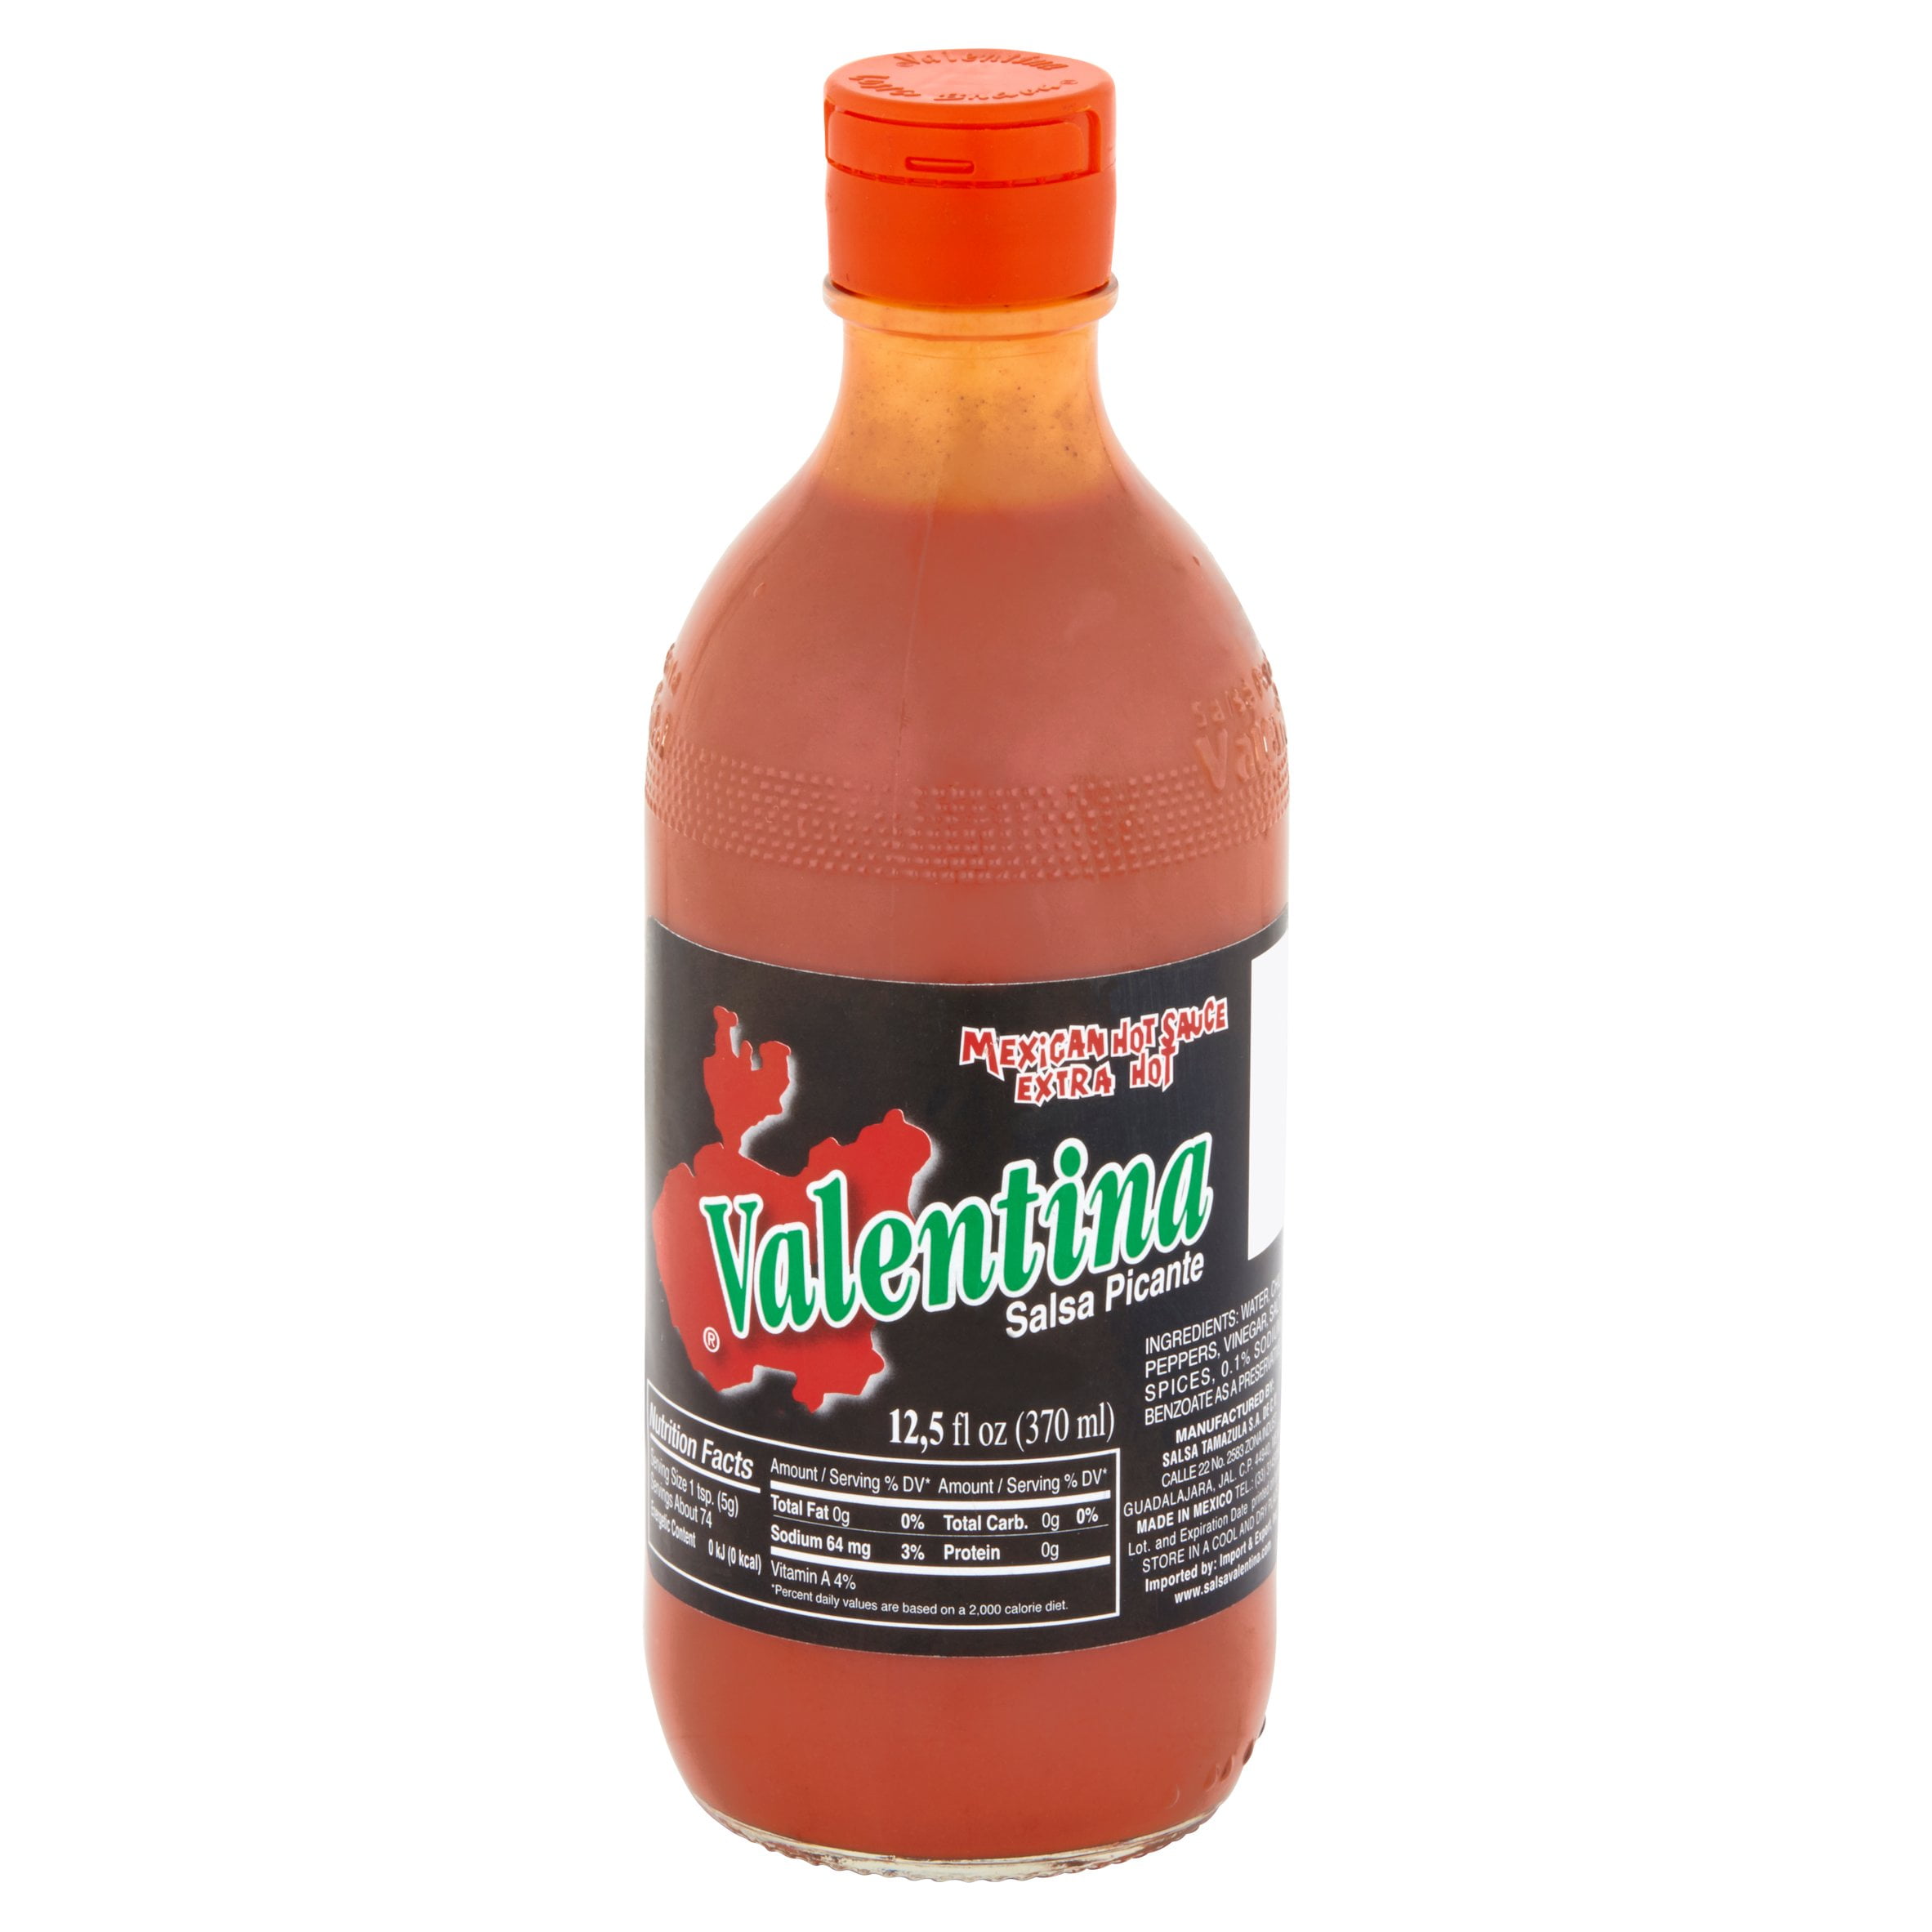 Valentina Extra Hot Mexican Hot Sauce 12 5 Fl Oz Walmart Com Walmart Com,Zanetti Parmigiano Reggiano Cheese